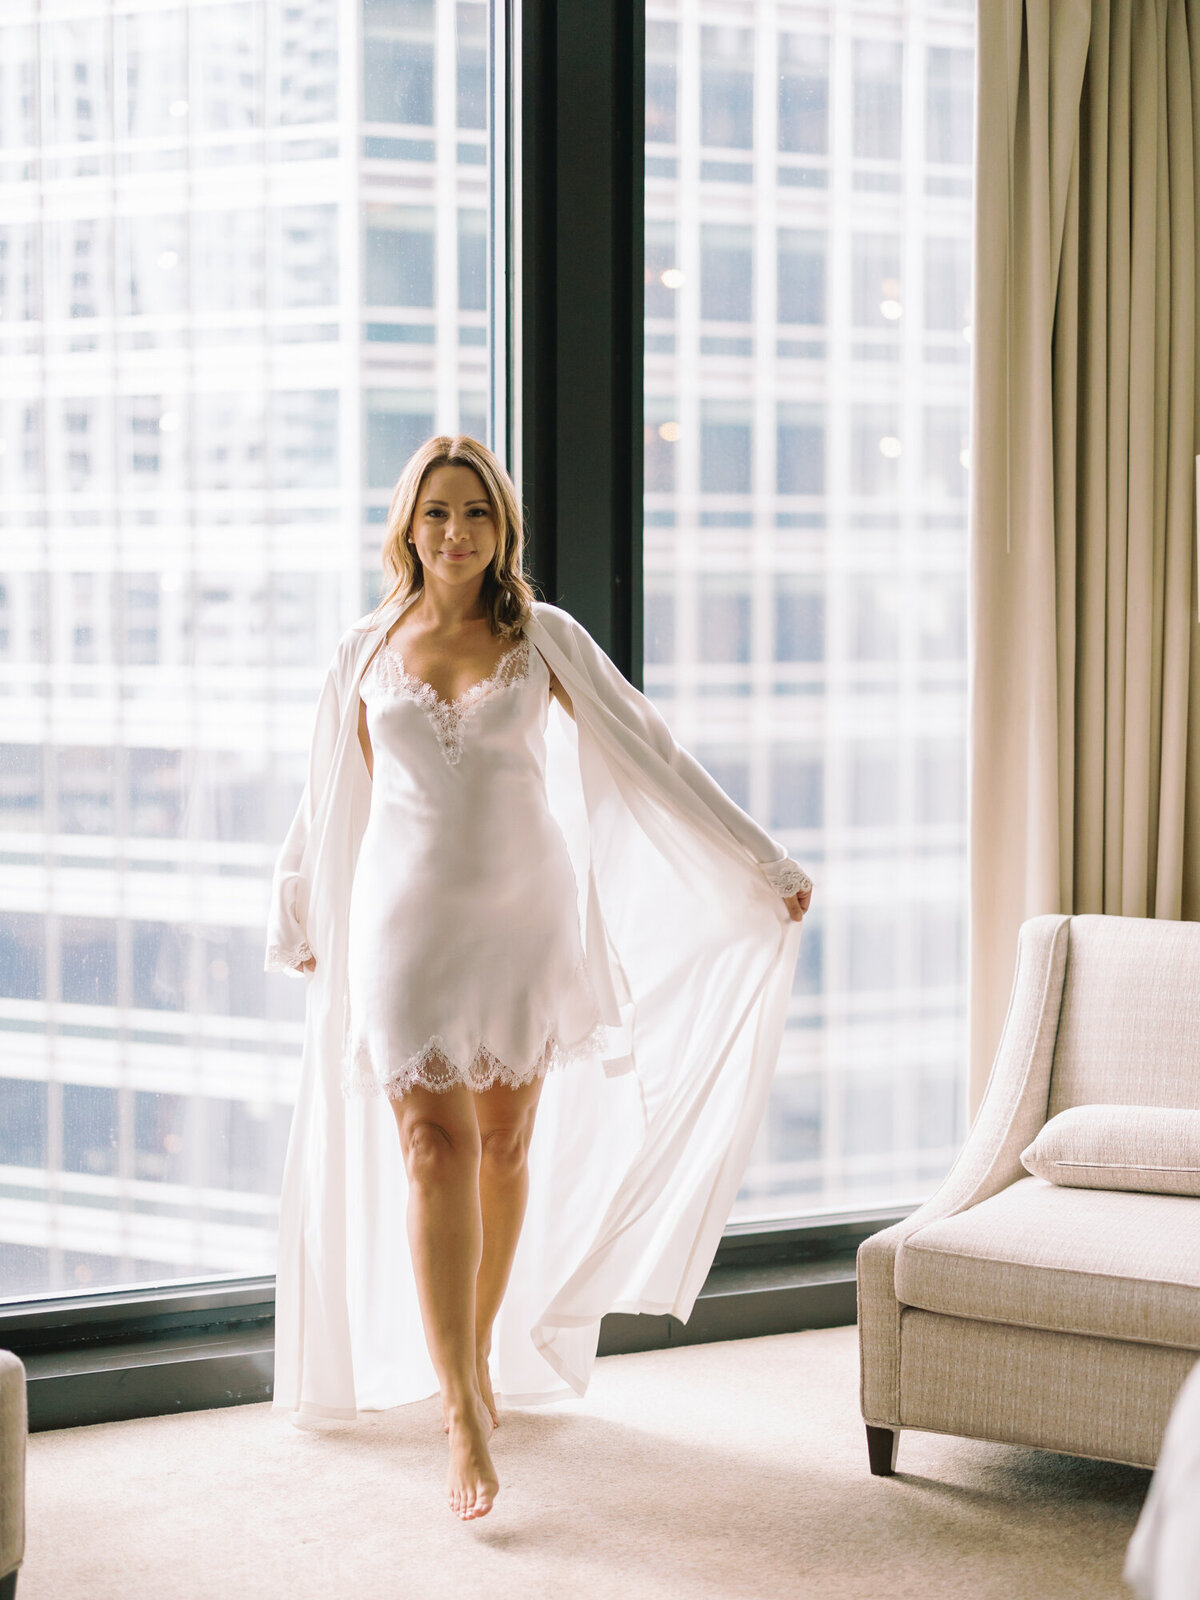 A luxurious boudoir photo taken in downtown Chicago